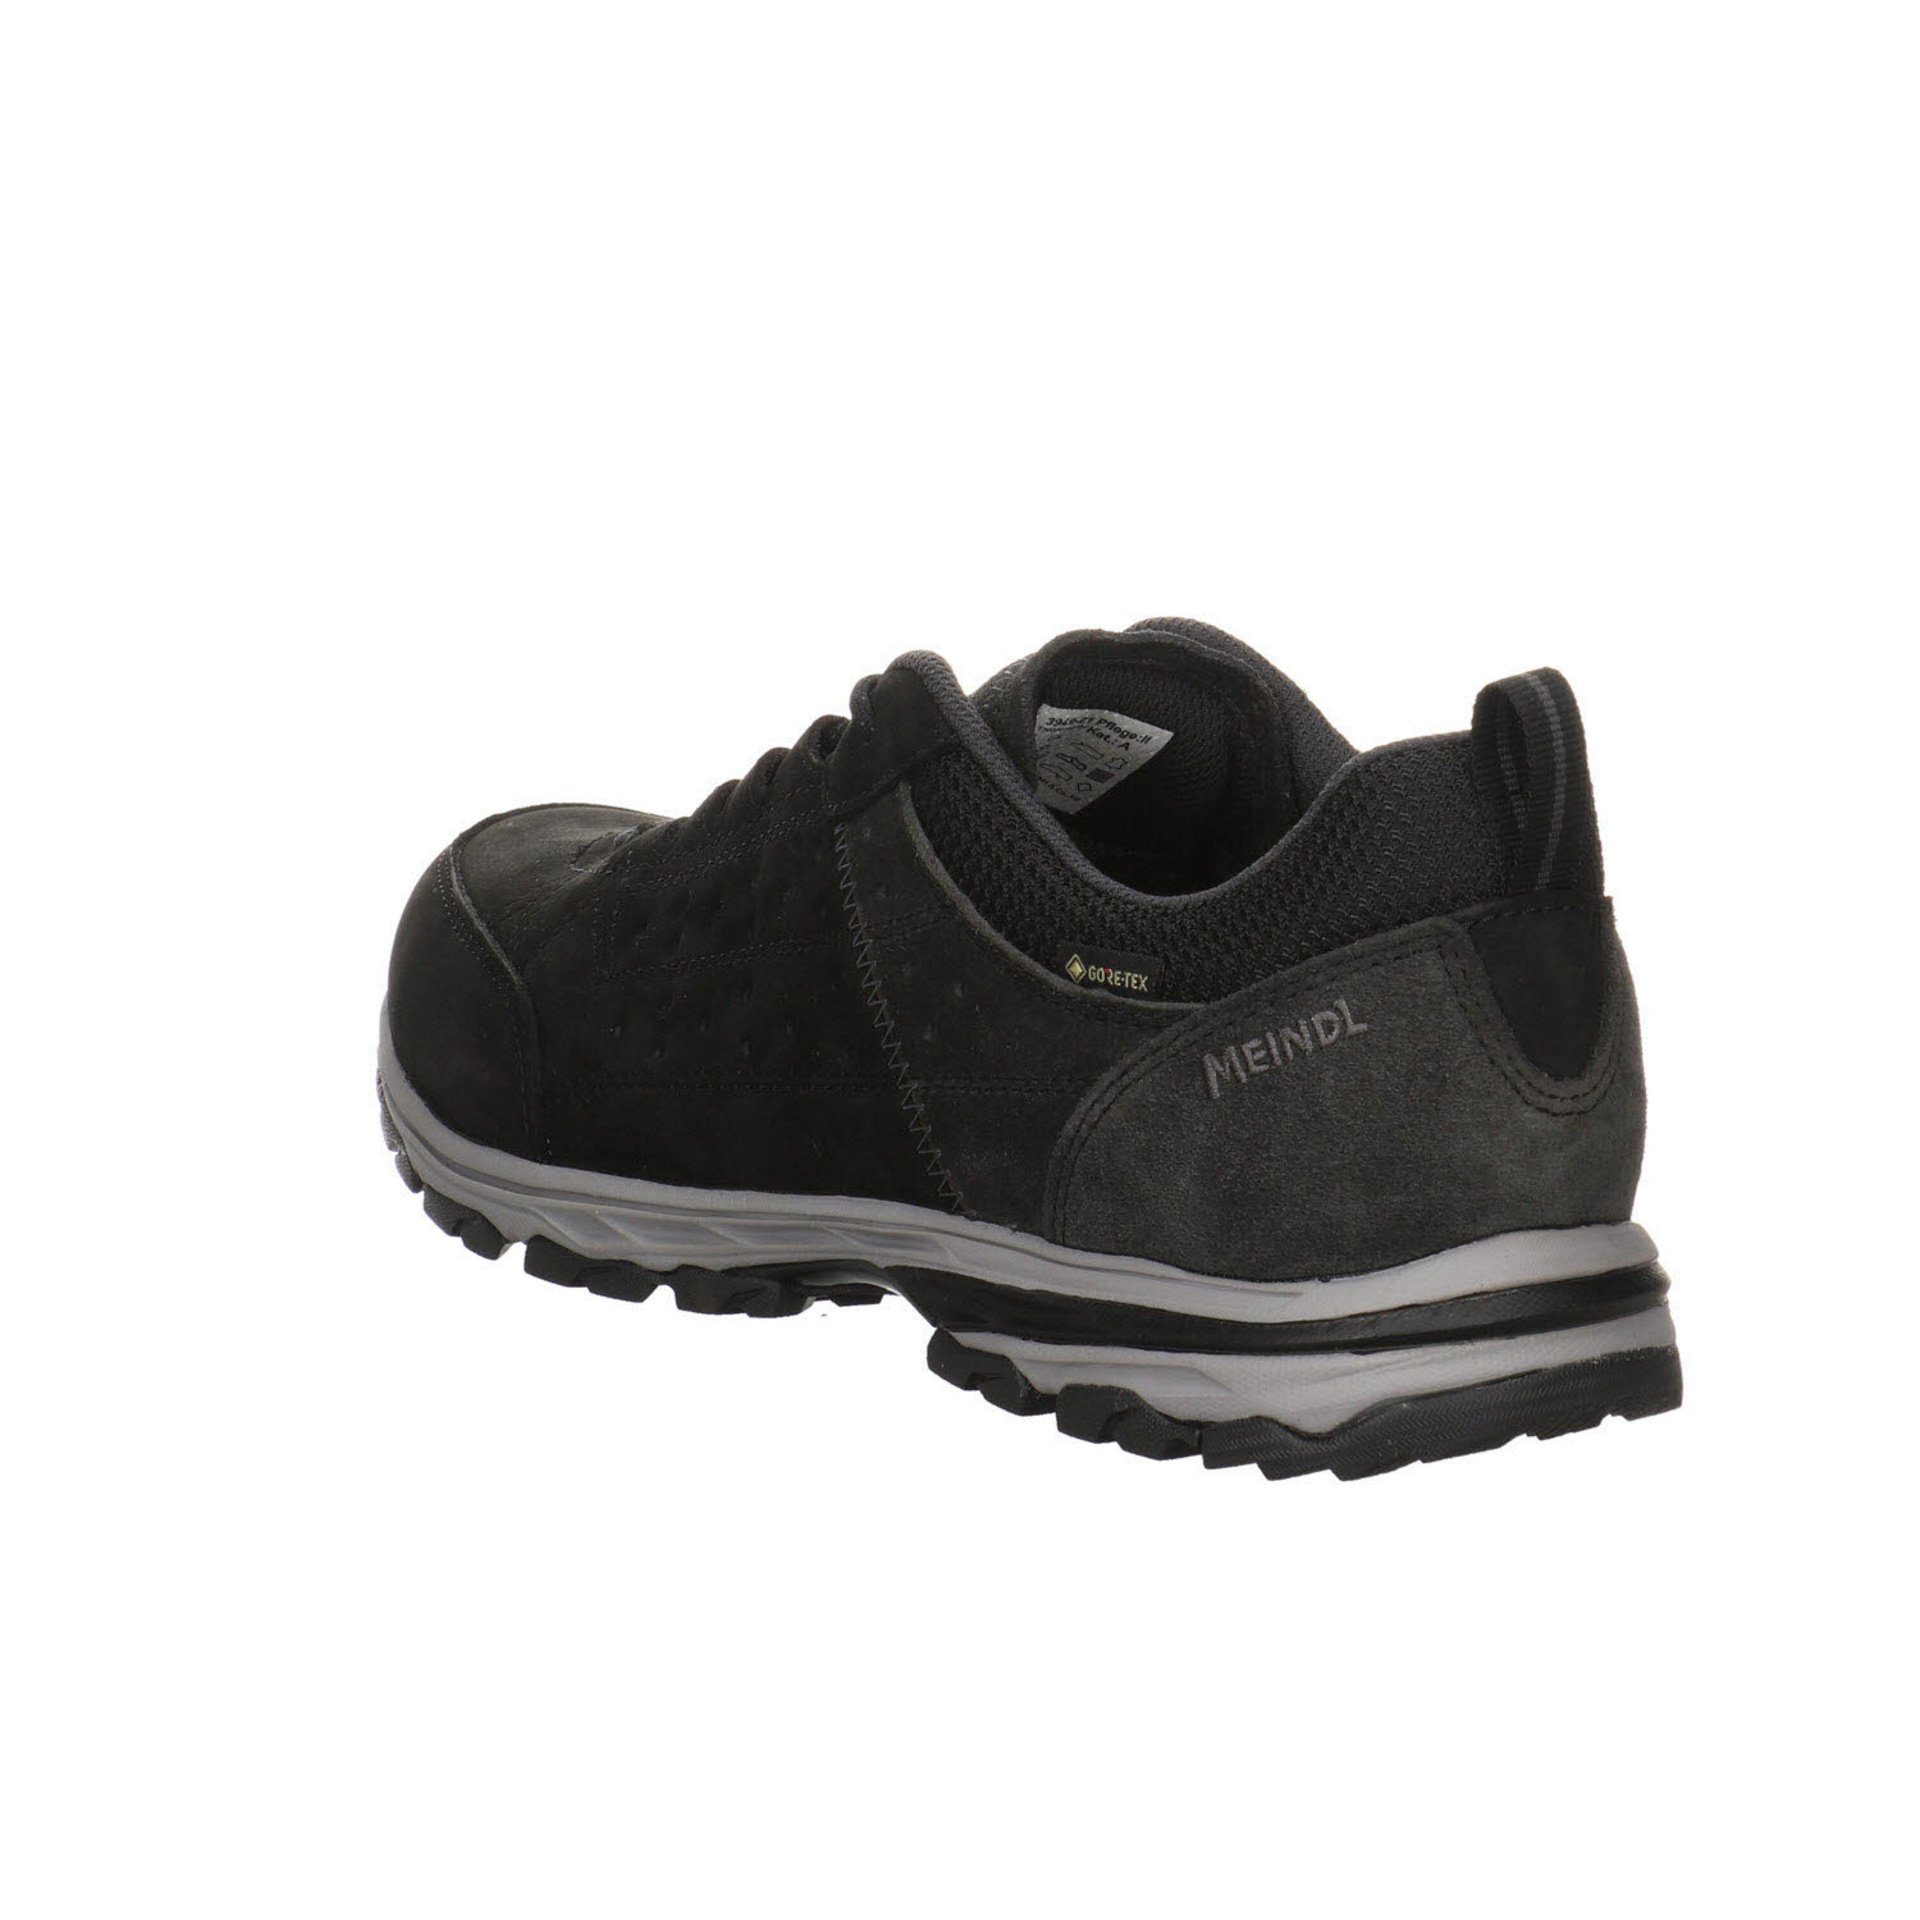 Herren schwarz Meindl Durban dunkel GTX Outdoorschuh Outdoor Schuhe Leder-/Textilkombination Outdoorschuh